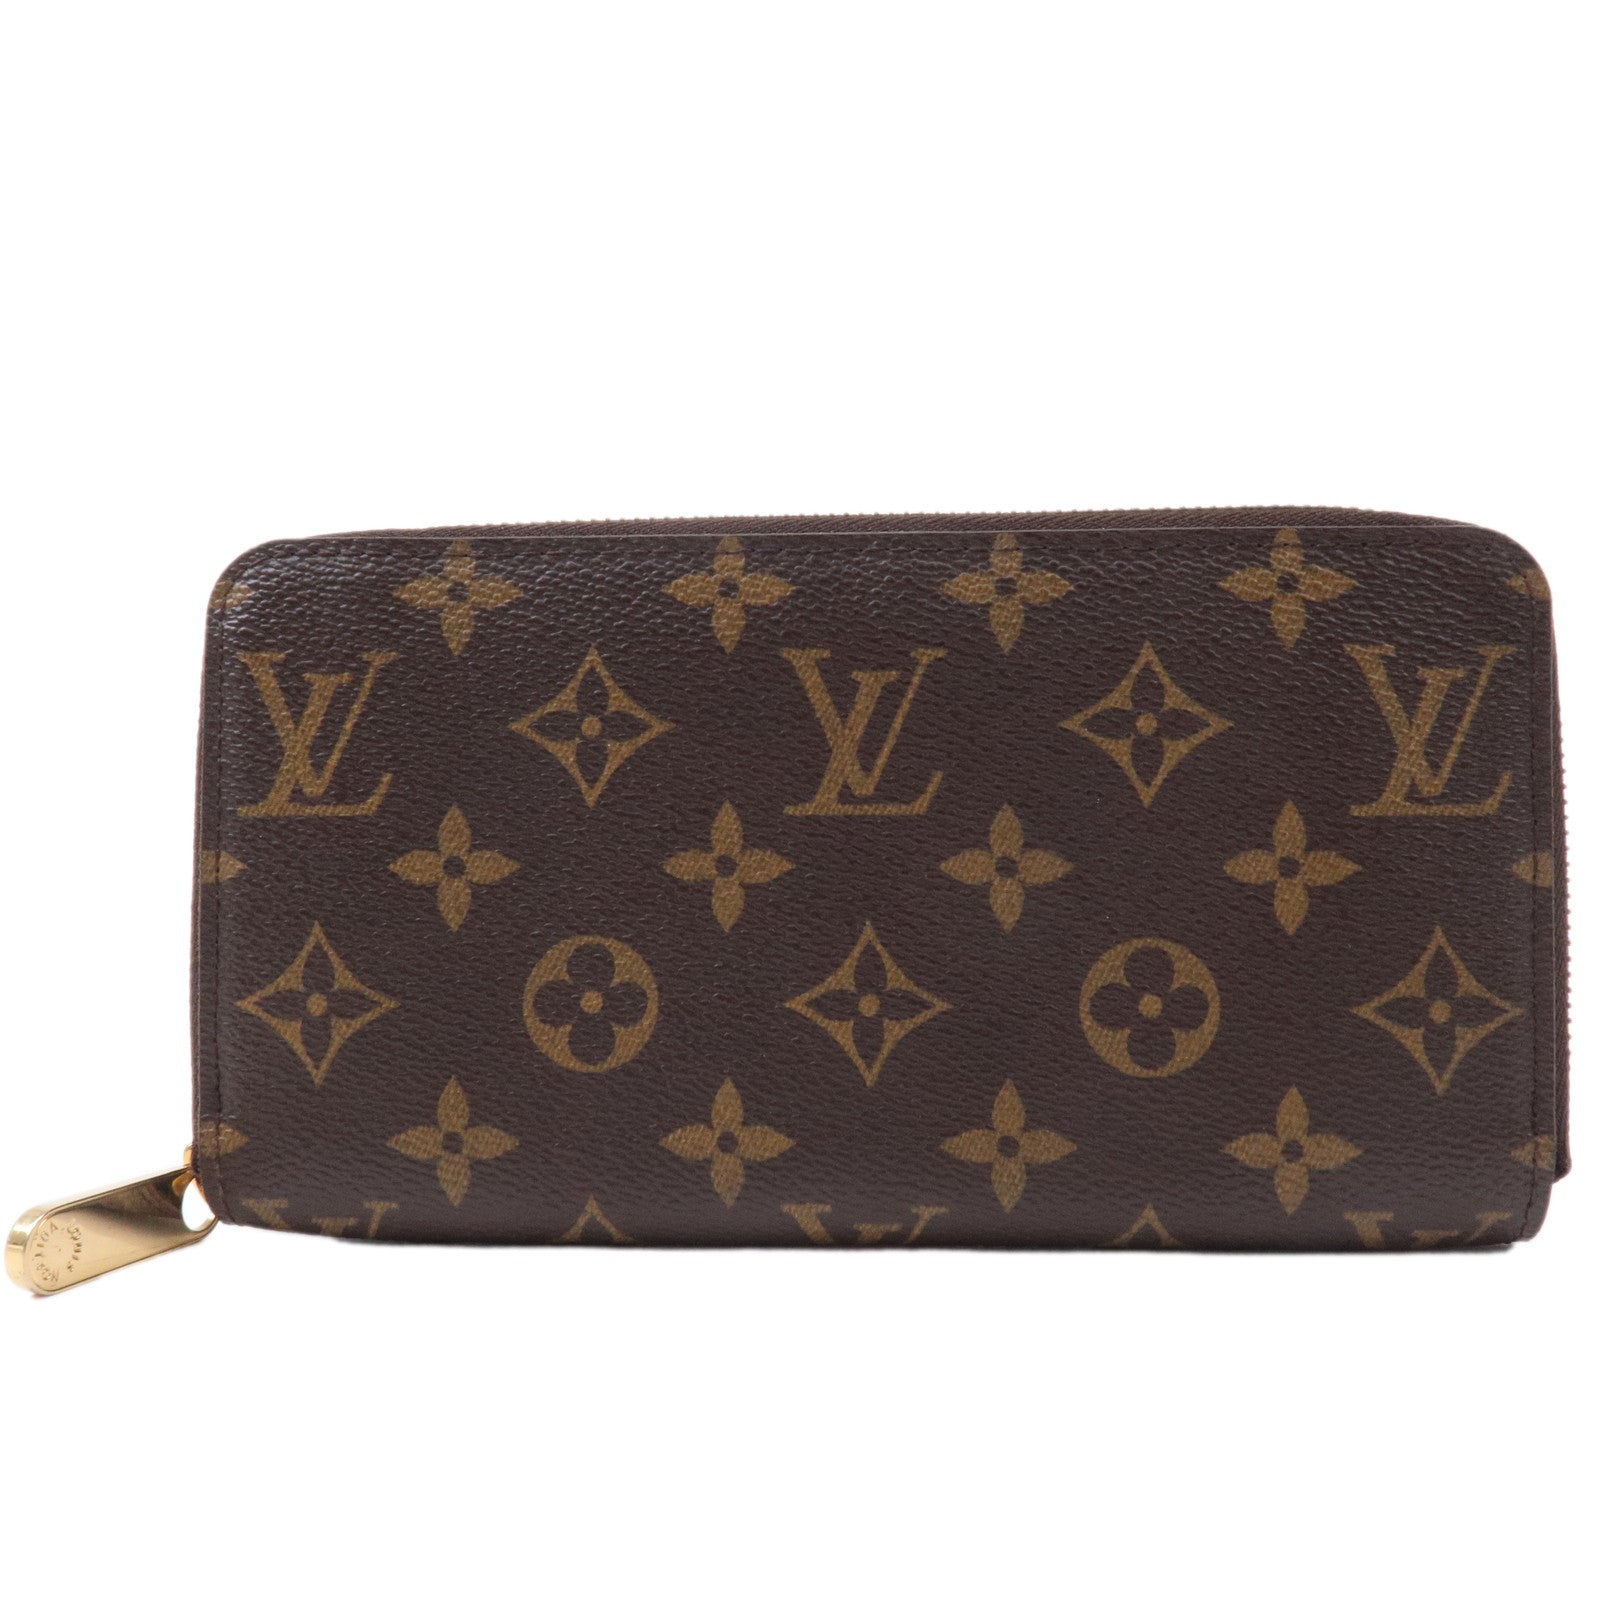 Louis Vuitton - Zippy Wallet - Monogram - Brown - Women - Luxury